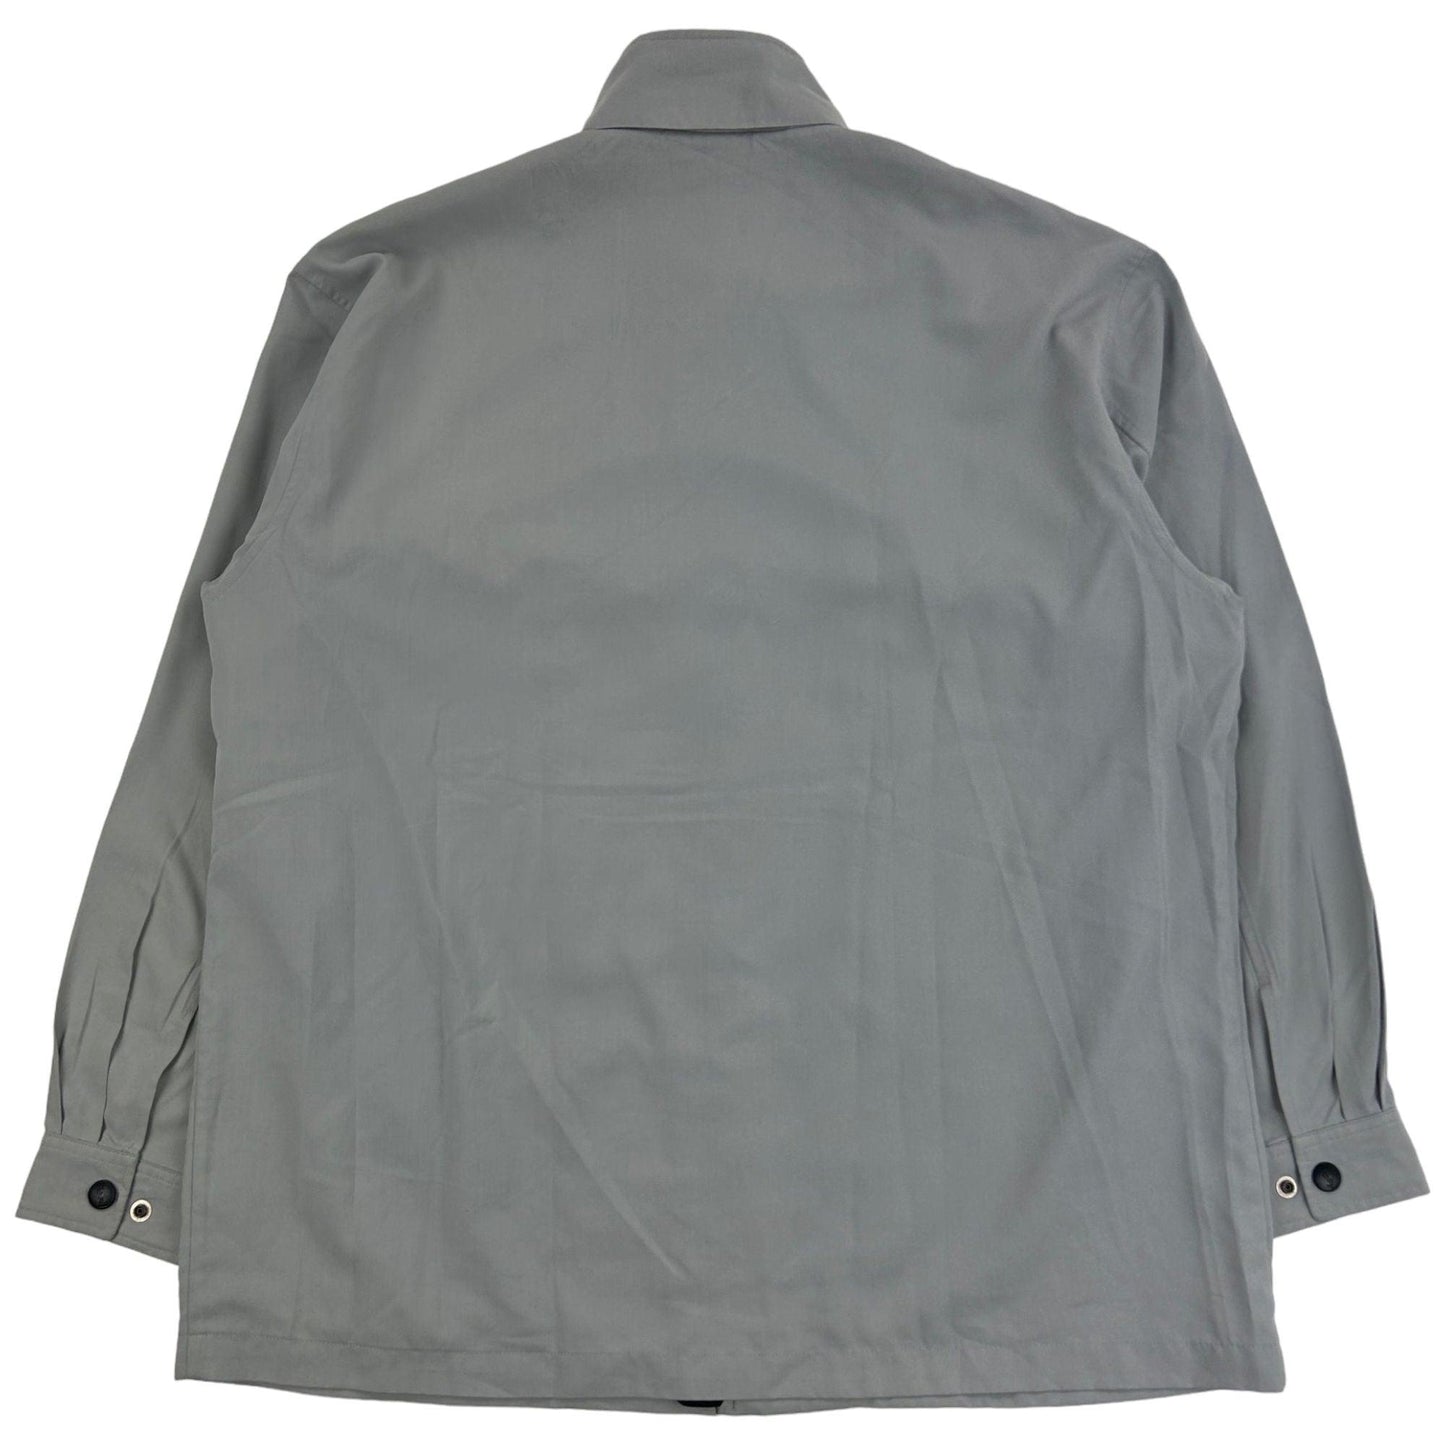 Vintage YSL Jacket Size XL - Known Source